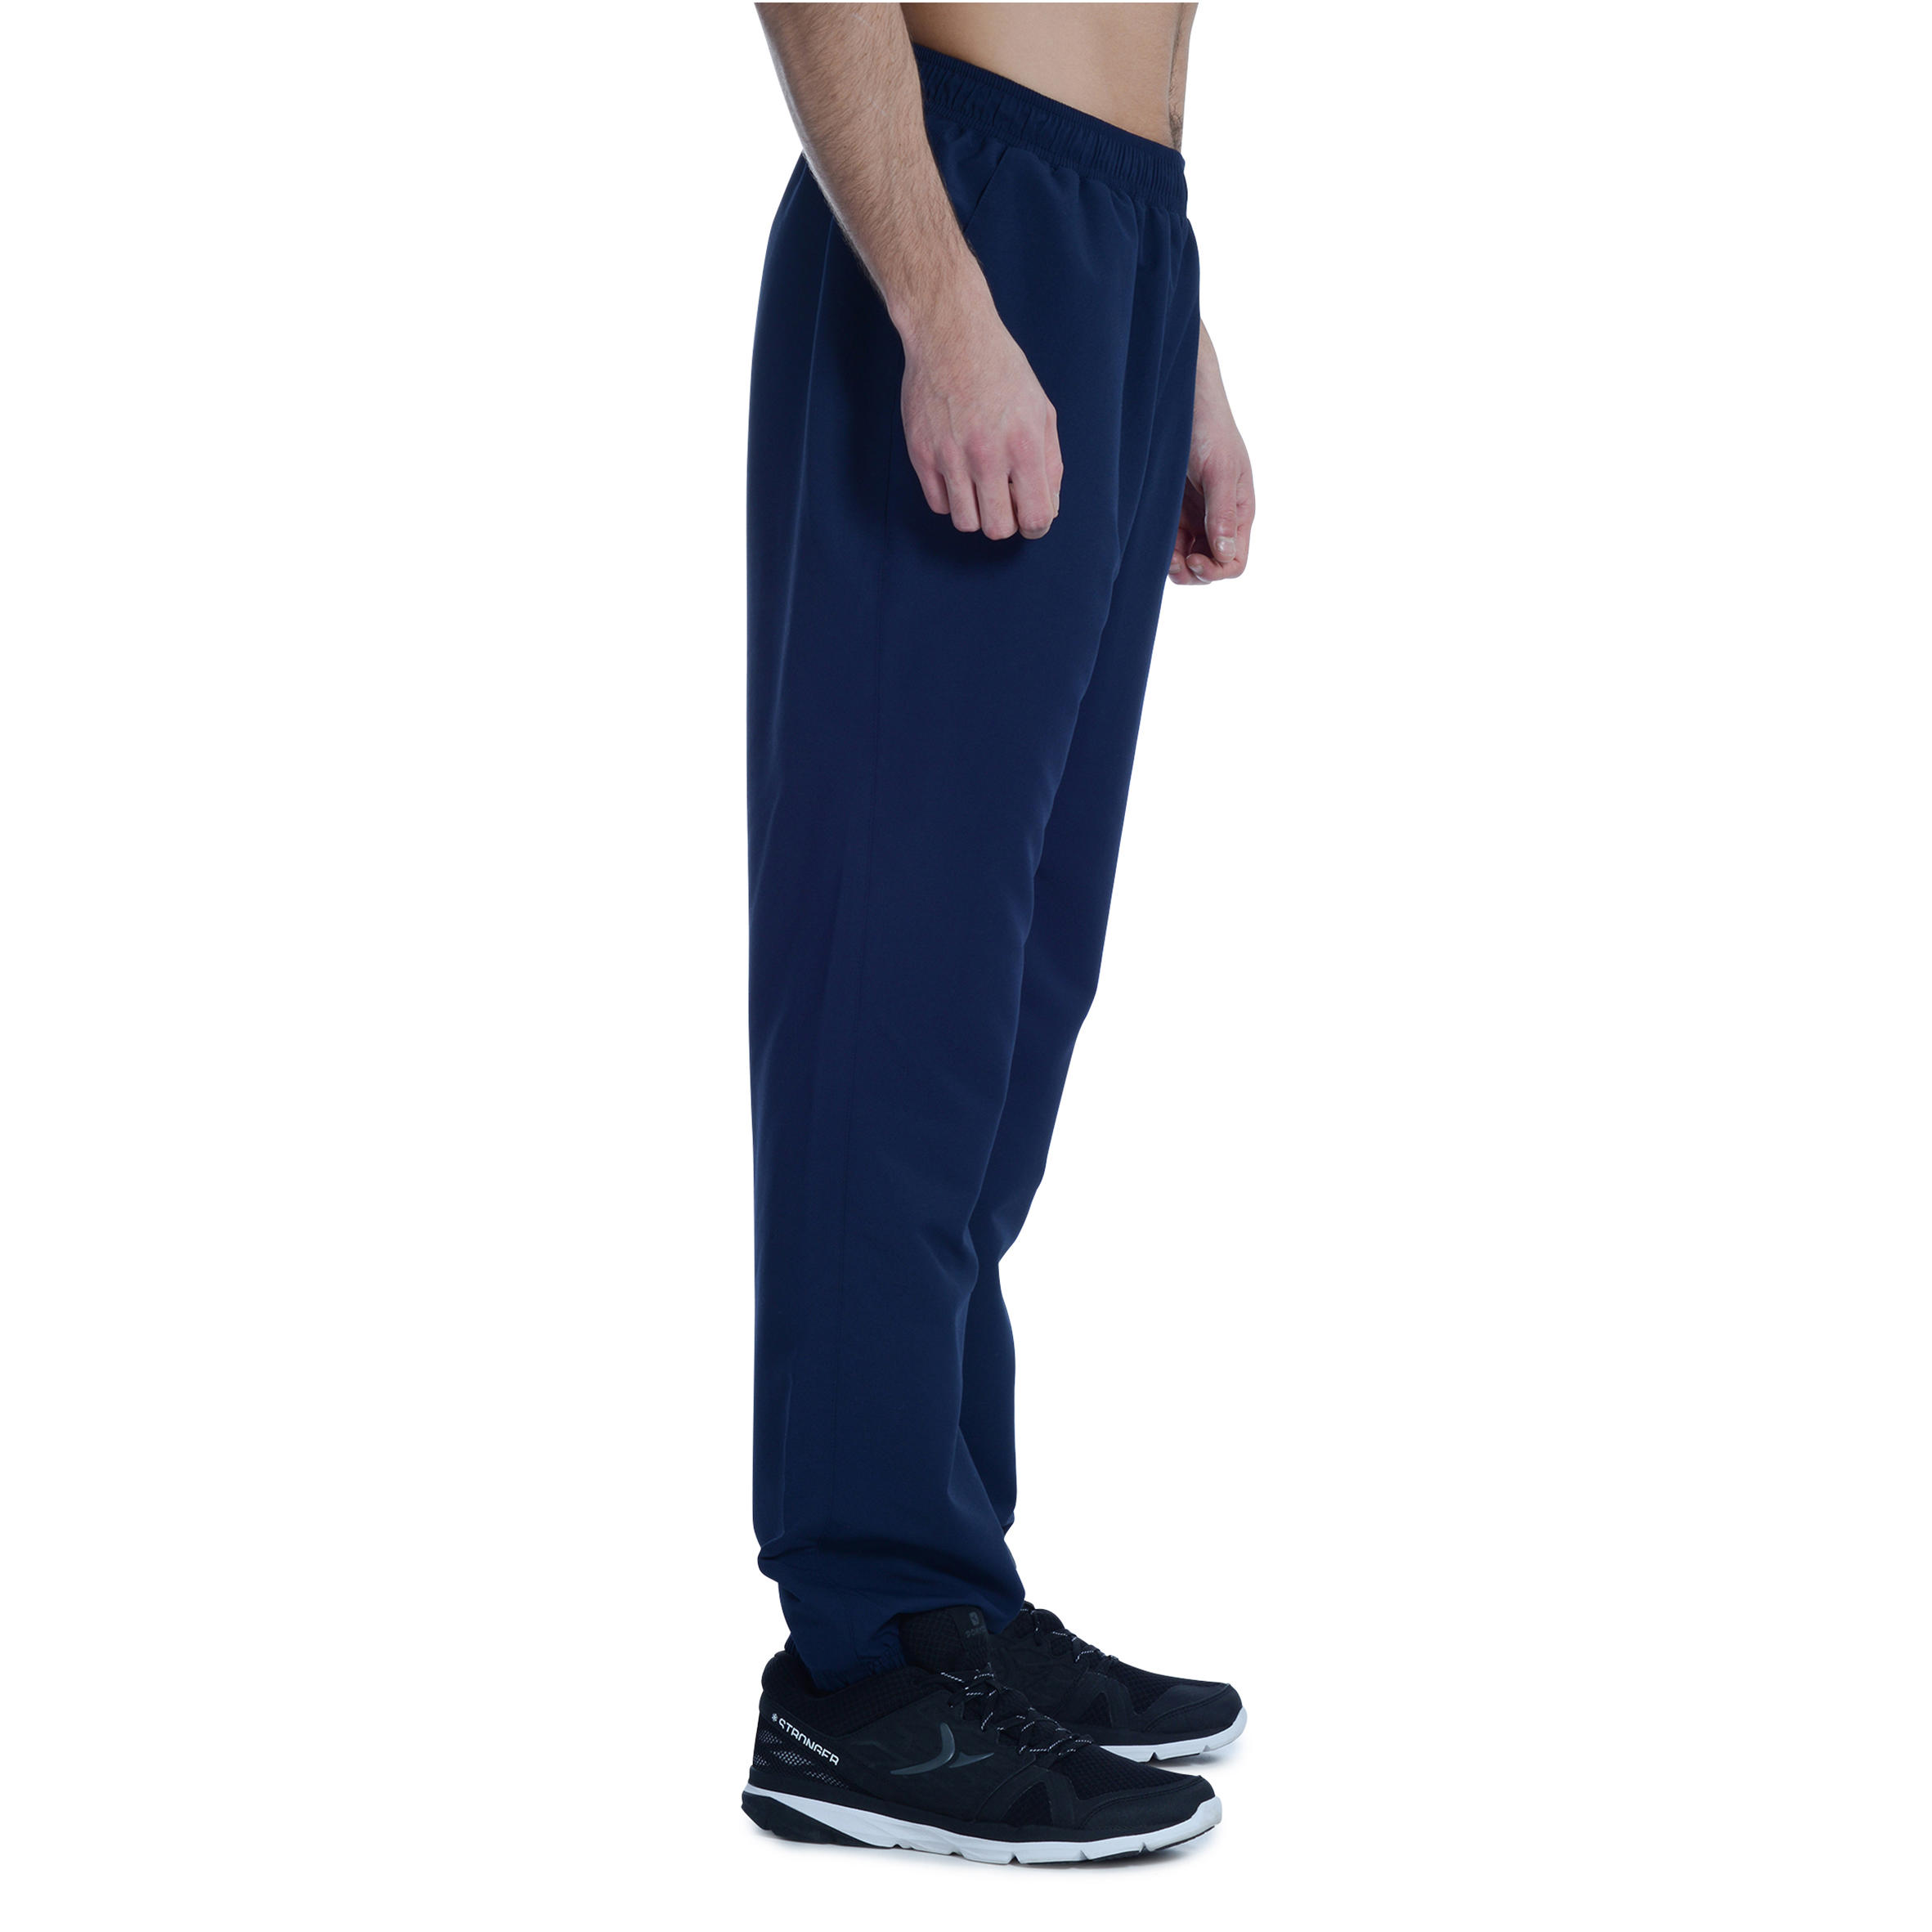 Stretchable Slimfit 4 Way Lycra Lower Mens Gym Sports Yoga Track Pants